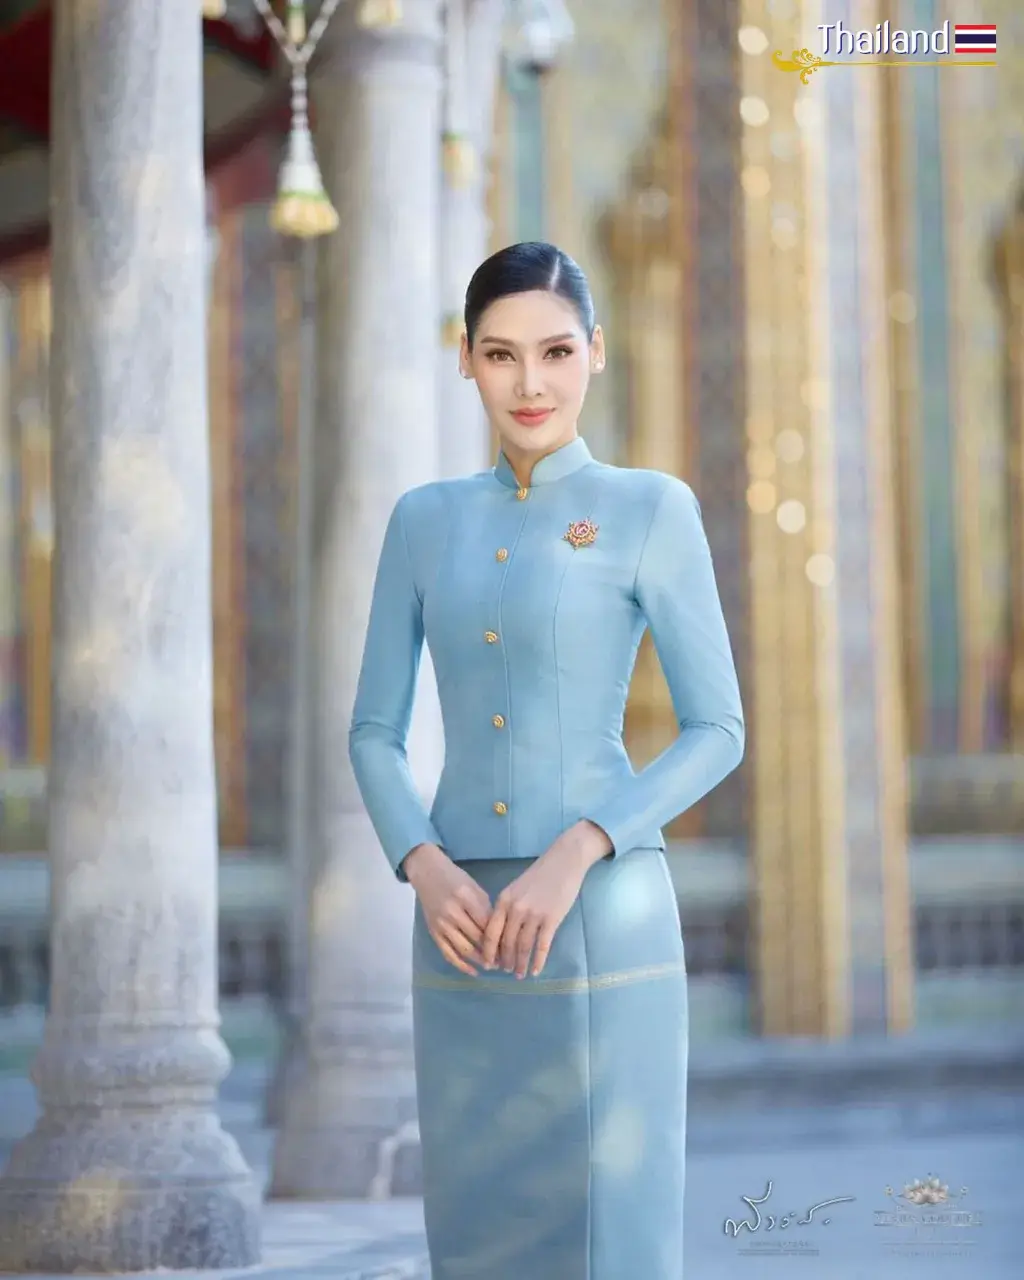 THAILAND 🇹🇭 | Thai Chitralada Dress: National Outfit